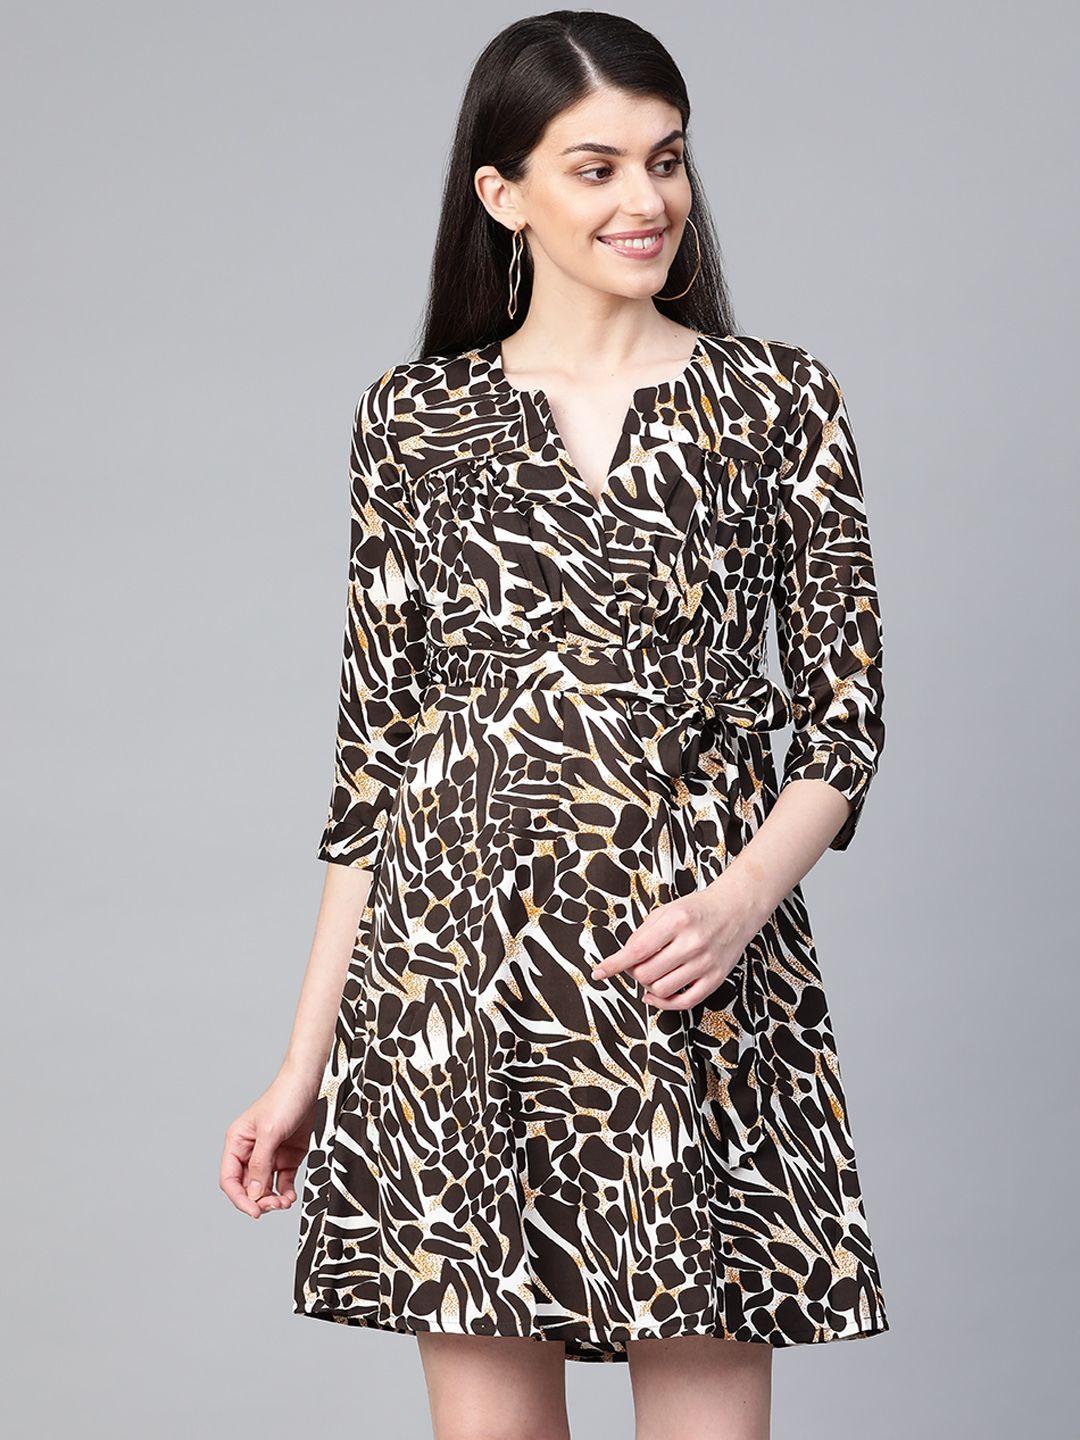 varushka women black & white leopard print fit & flare dress